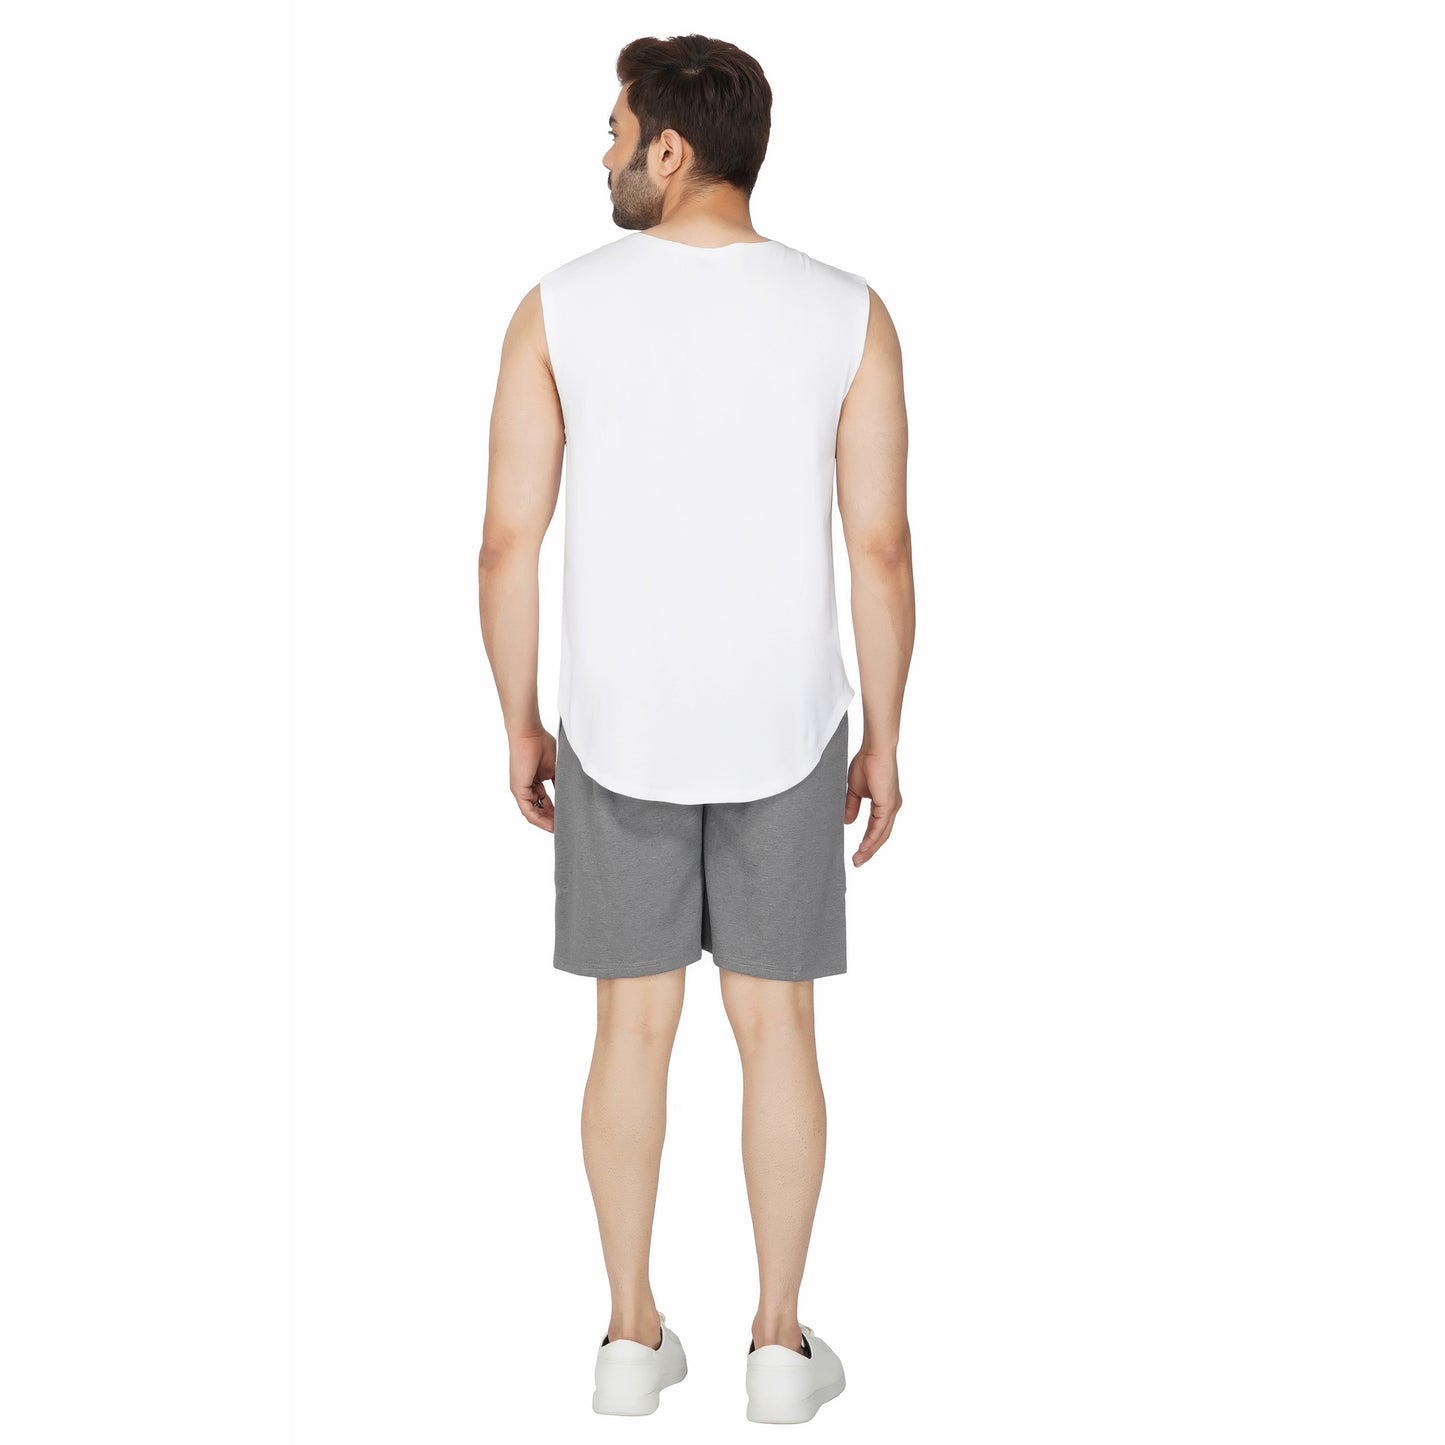 SLAY. Men's Light Grey Shorts with White Stripes-clothing-to-slay.myshopify.com-Men's Shorts